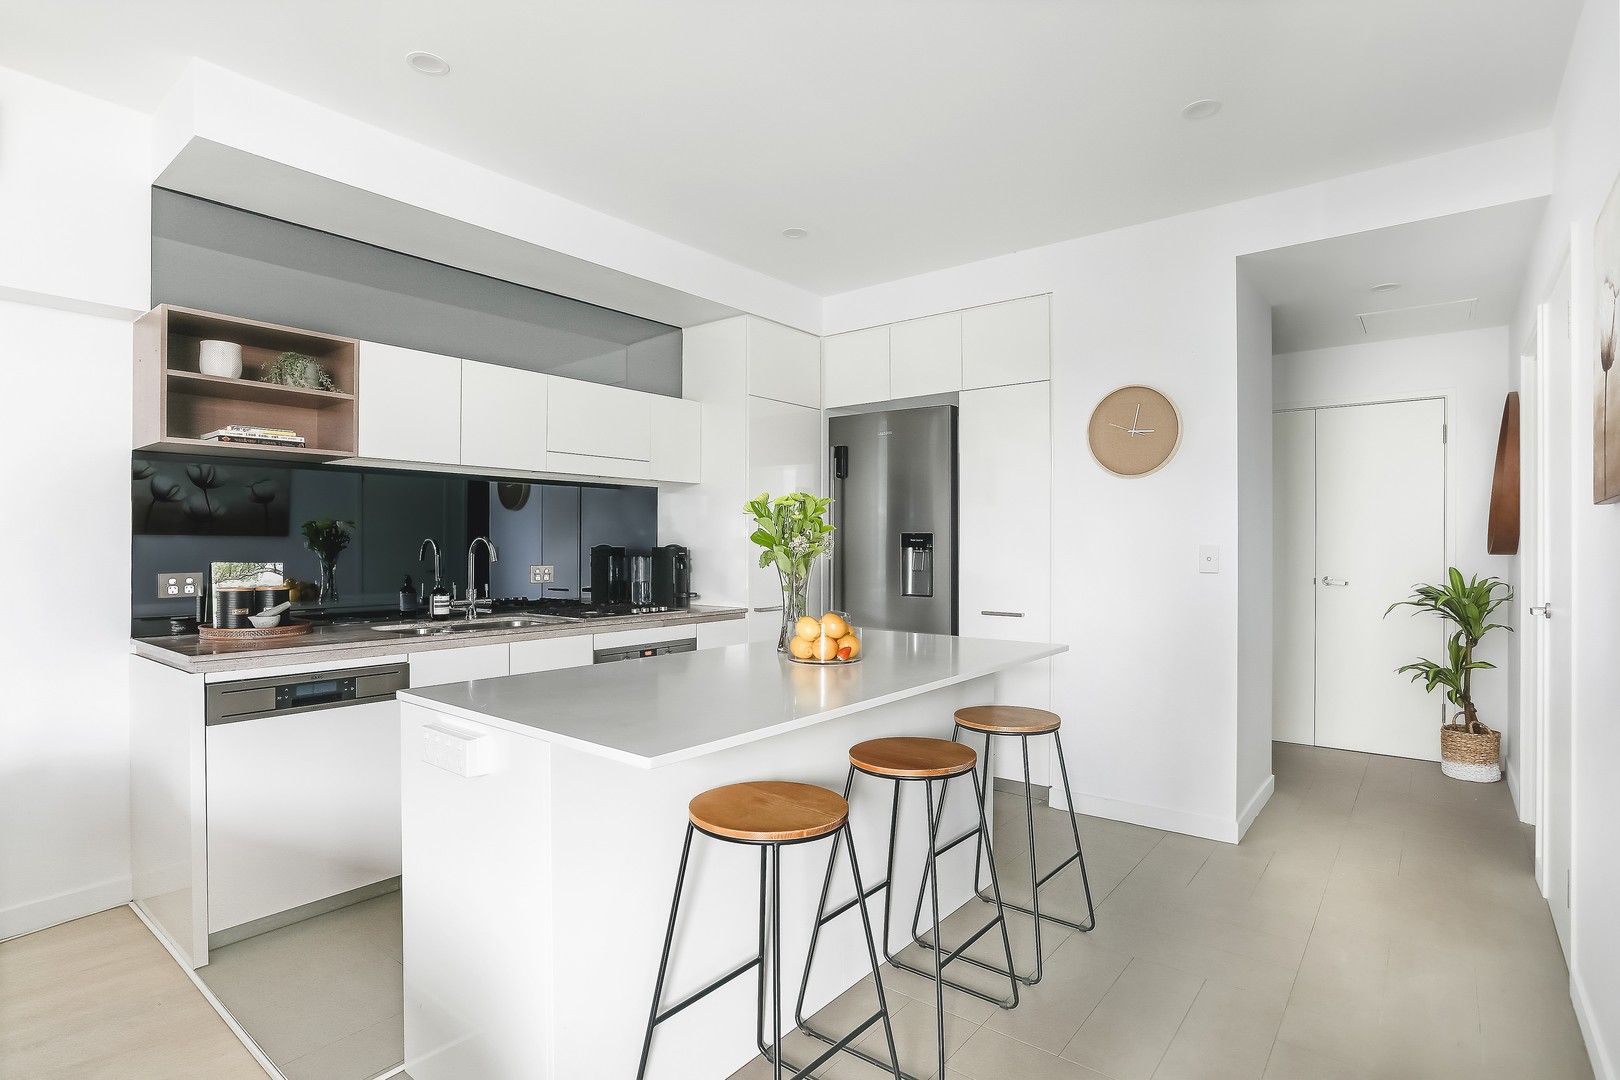 2 bedrooms Apartment / Unit / Flat in 411/23 Archibald Avenue WATERLOO NSW, 2017